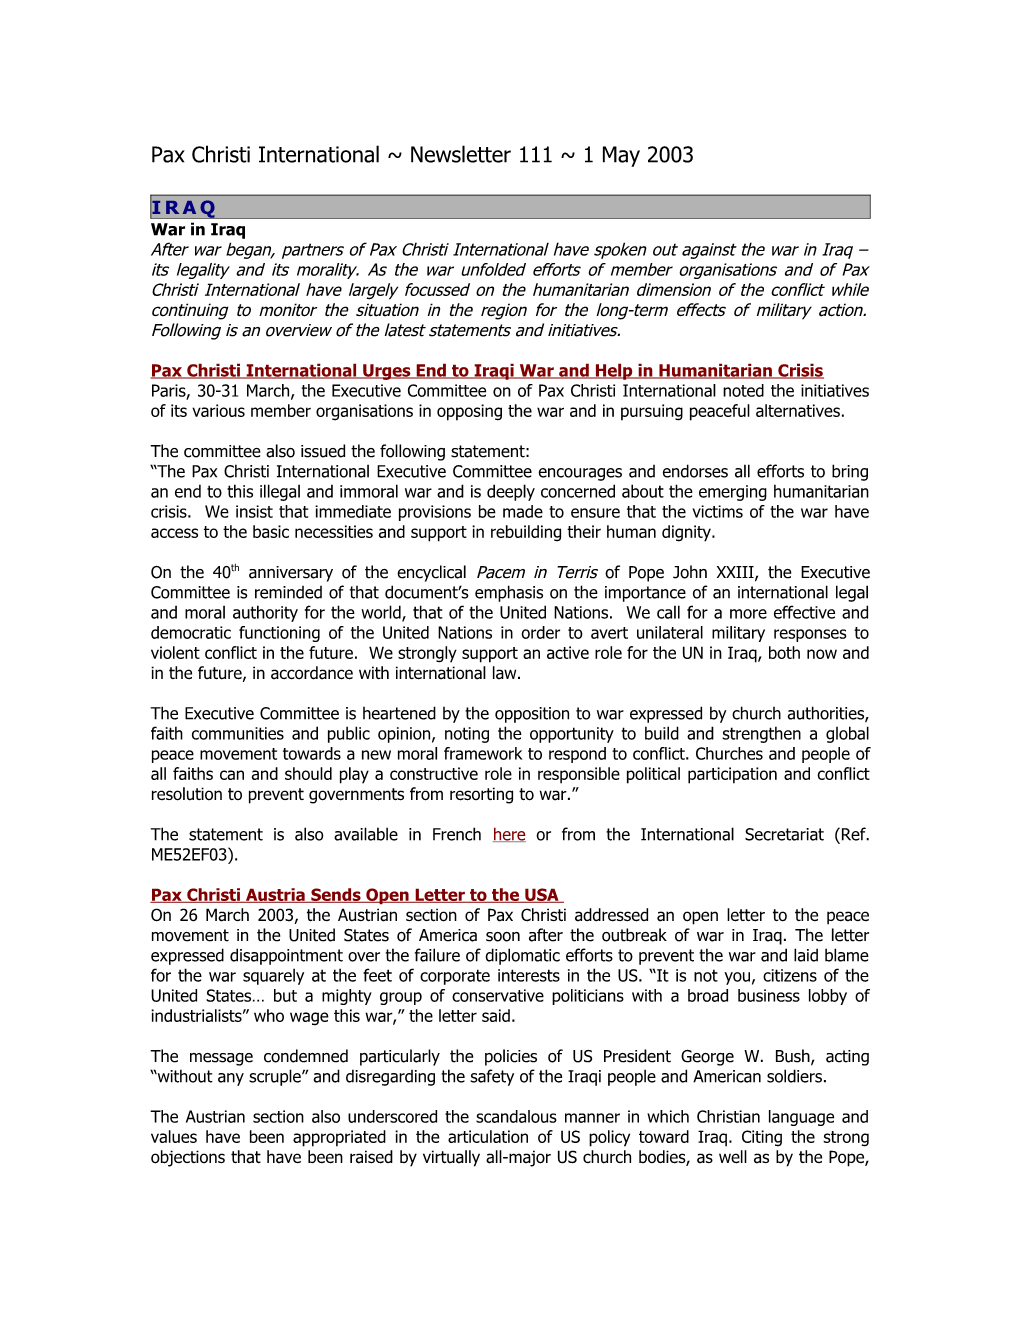 Pax Christi International Newsletter 107 1 December 2002